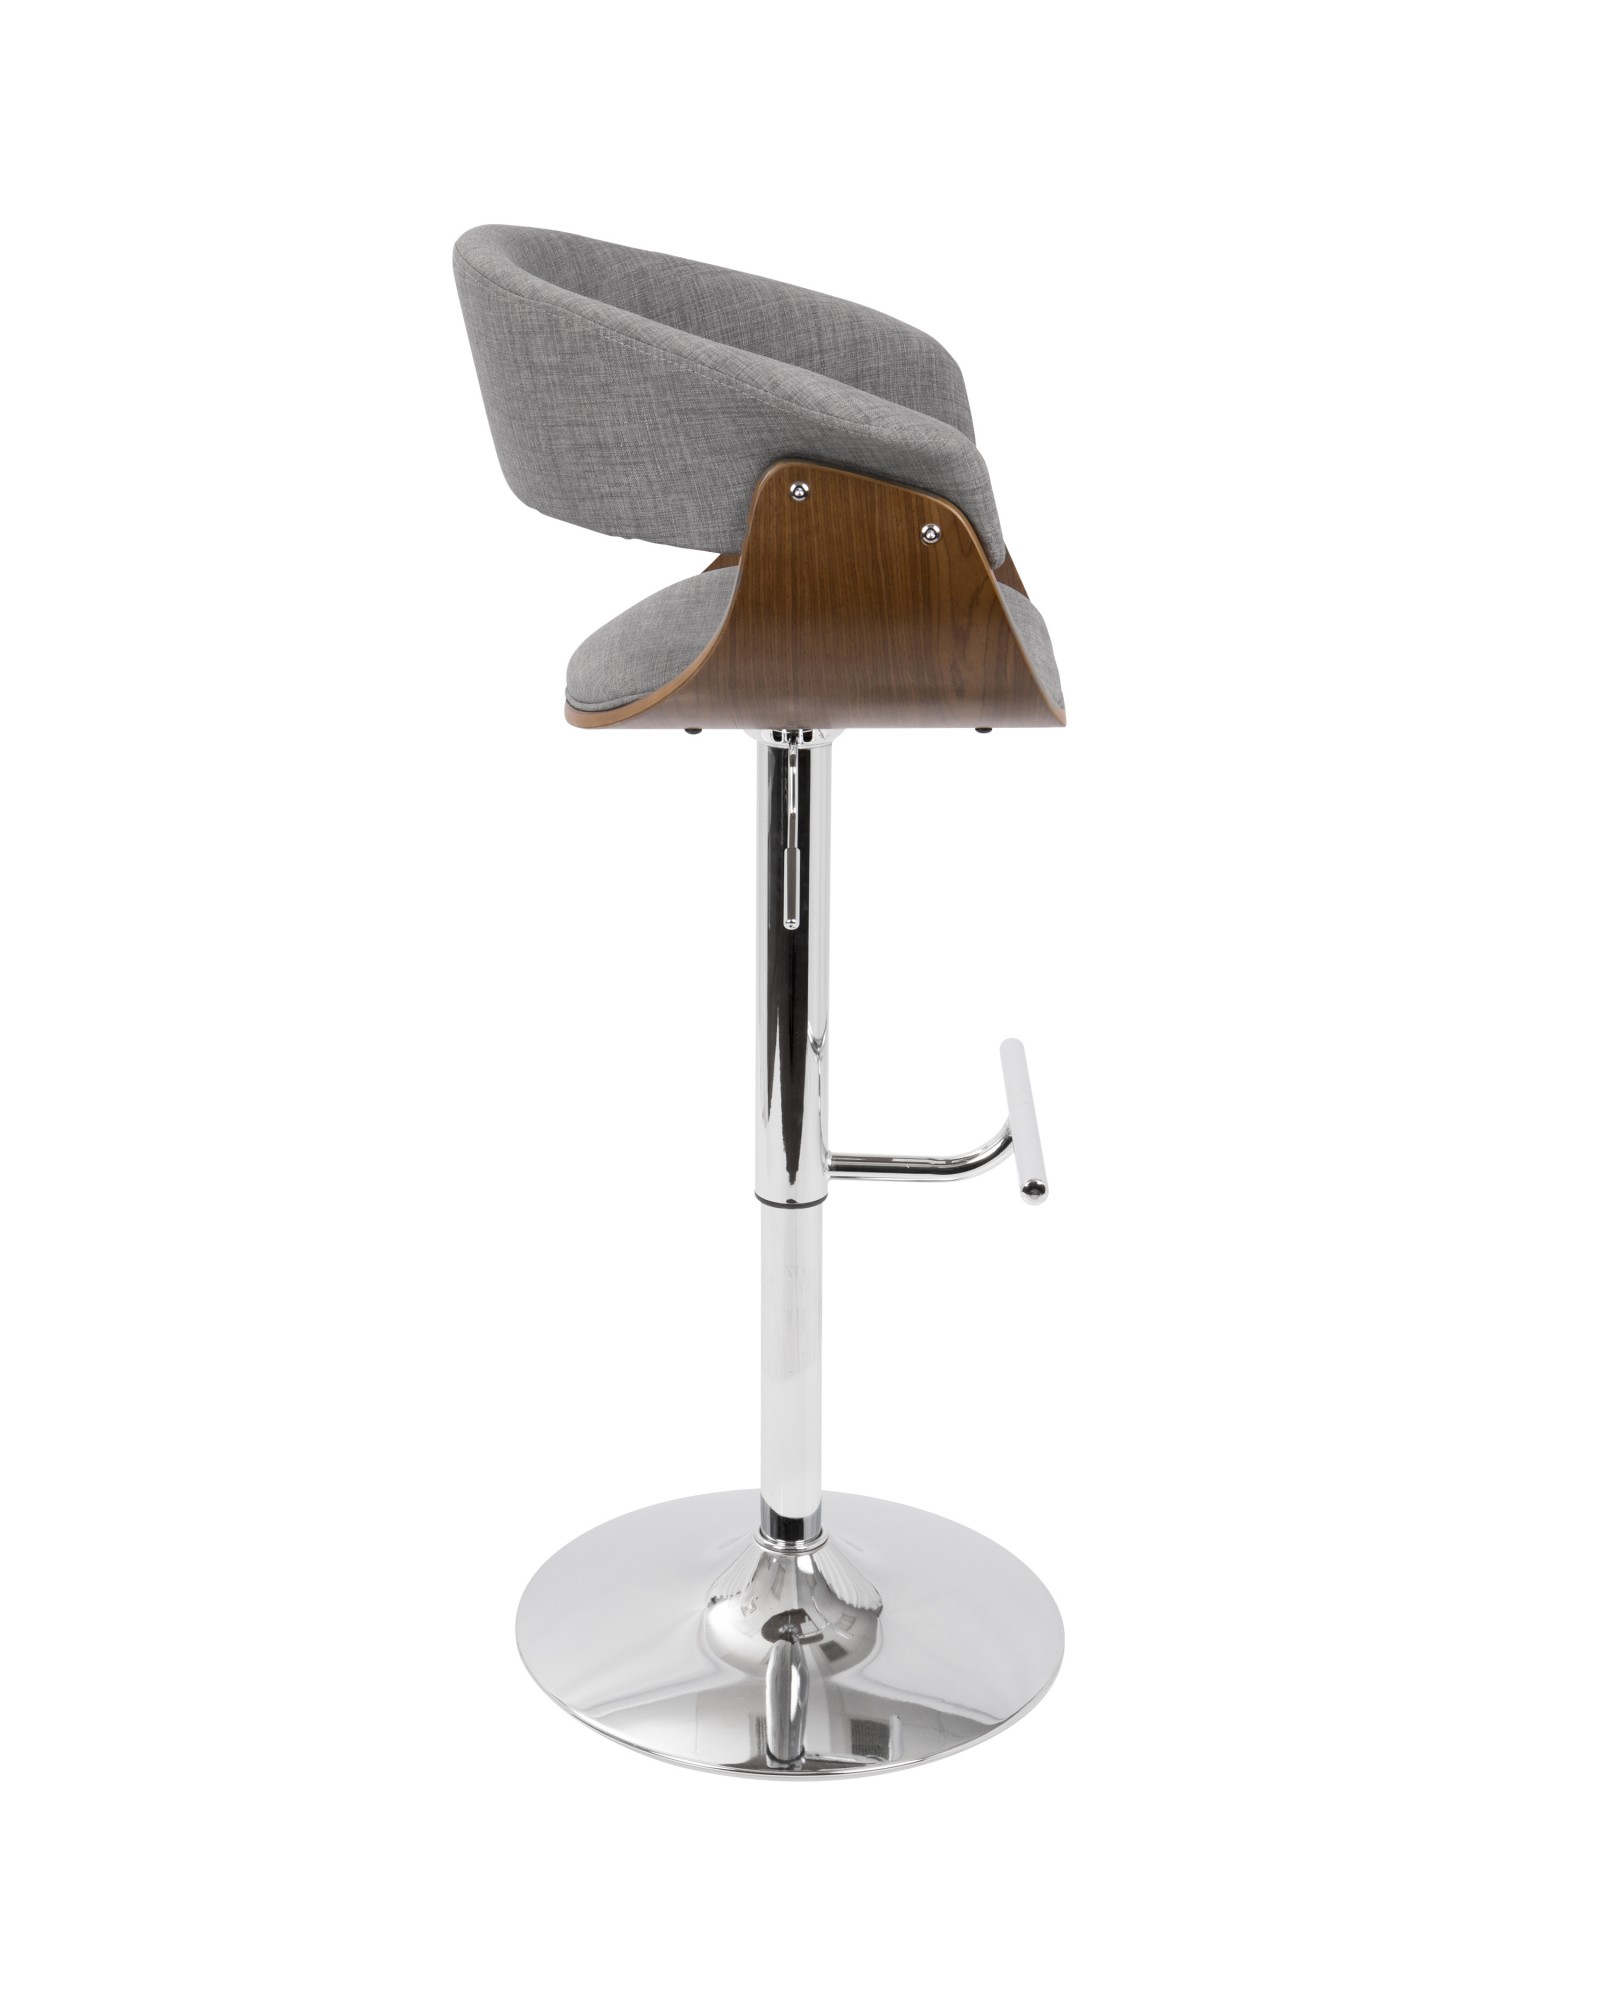 Vintage Mod Mid-Century Modern Adjustable Barstool with Swivel in Walnut and Light Grey Fabric